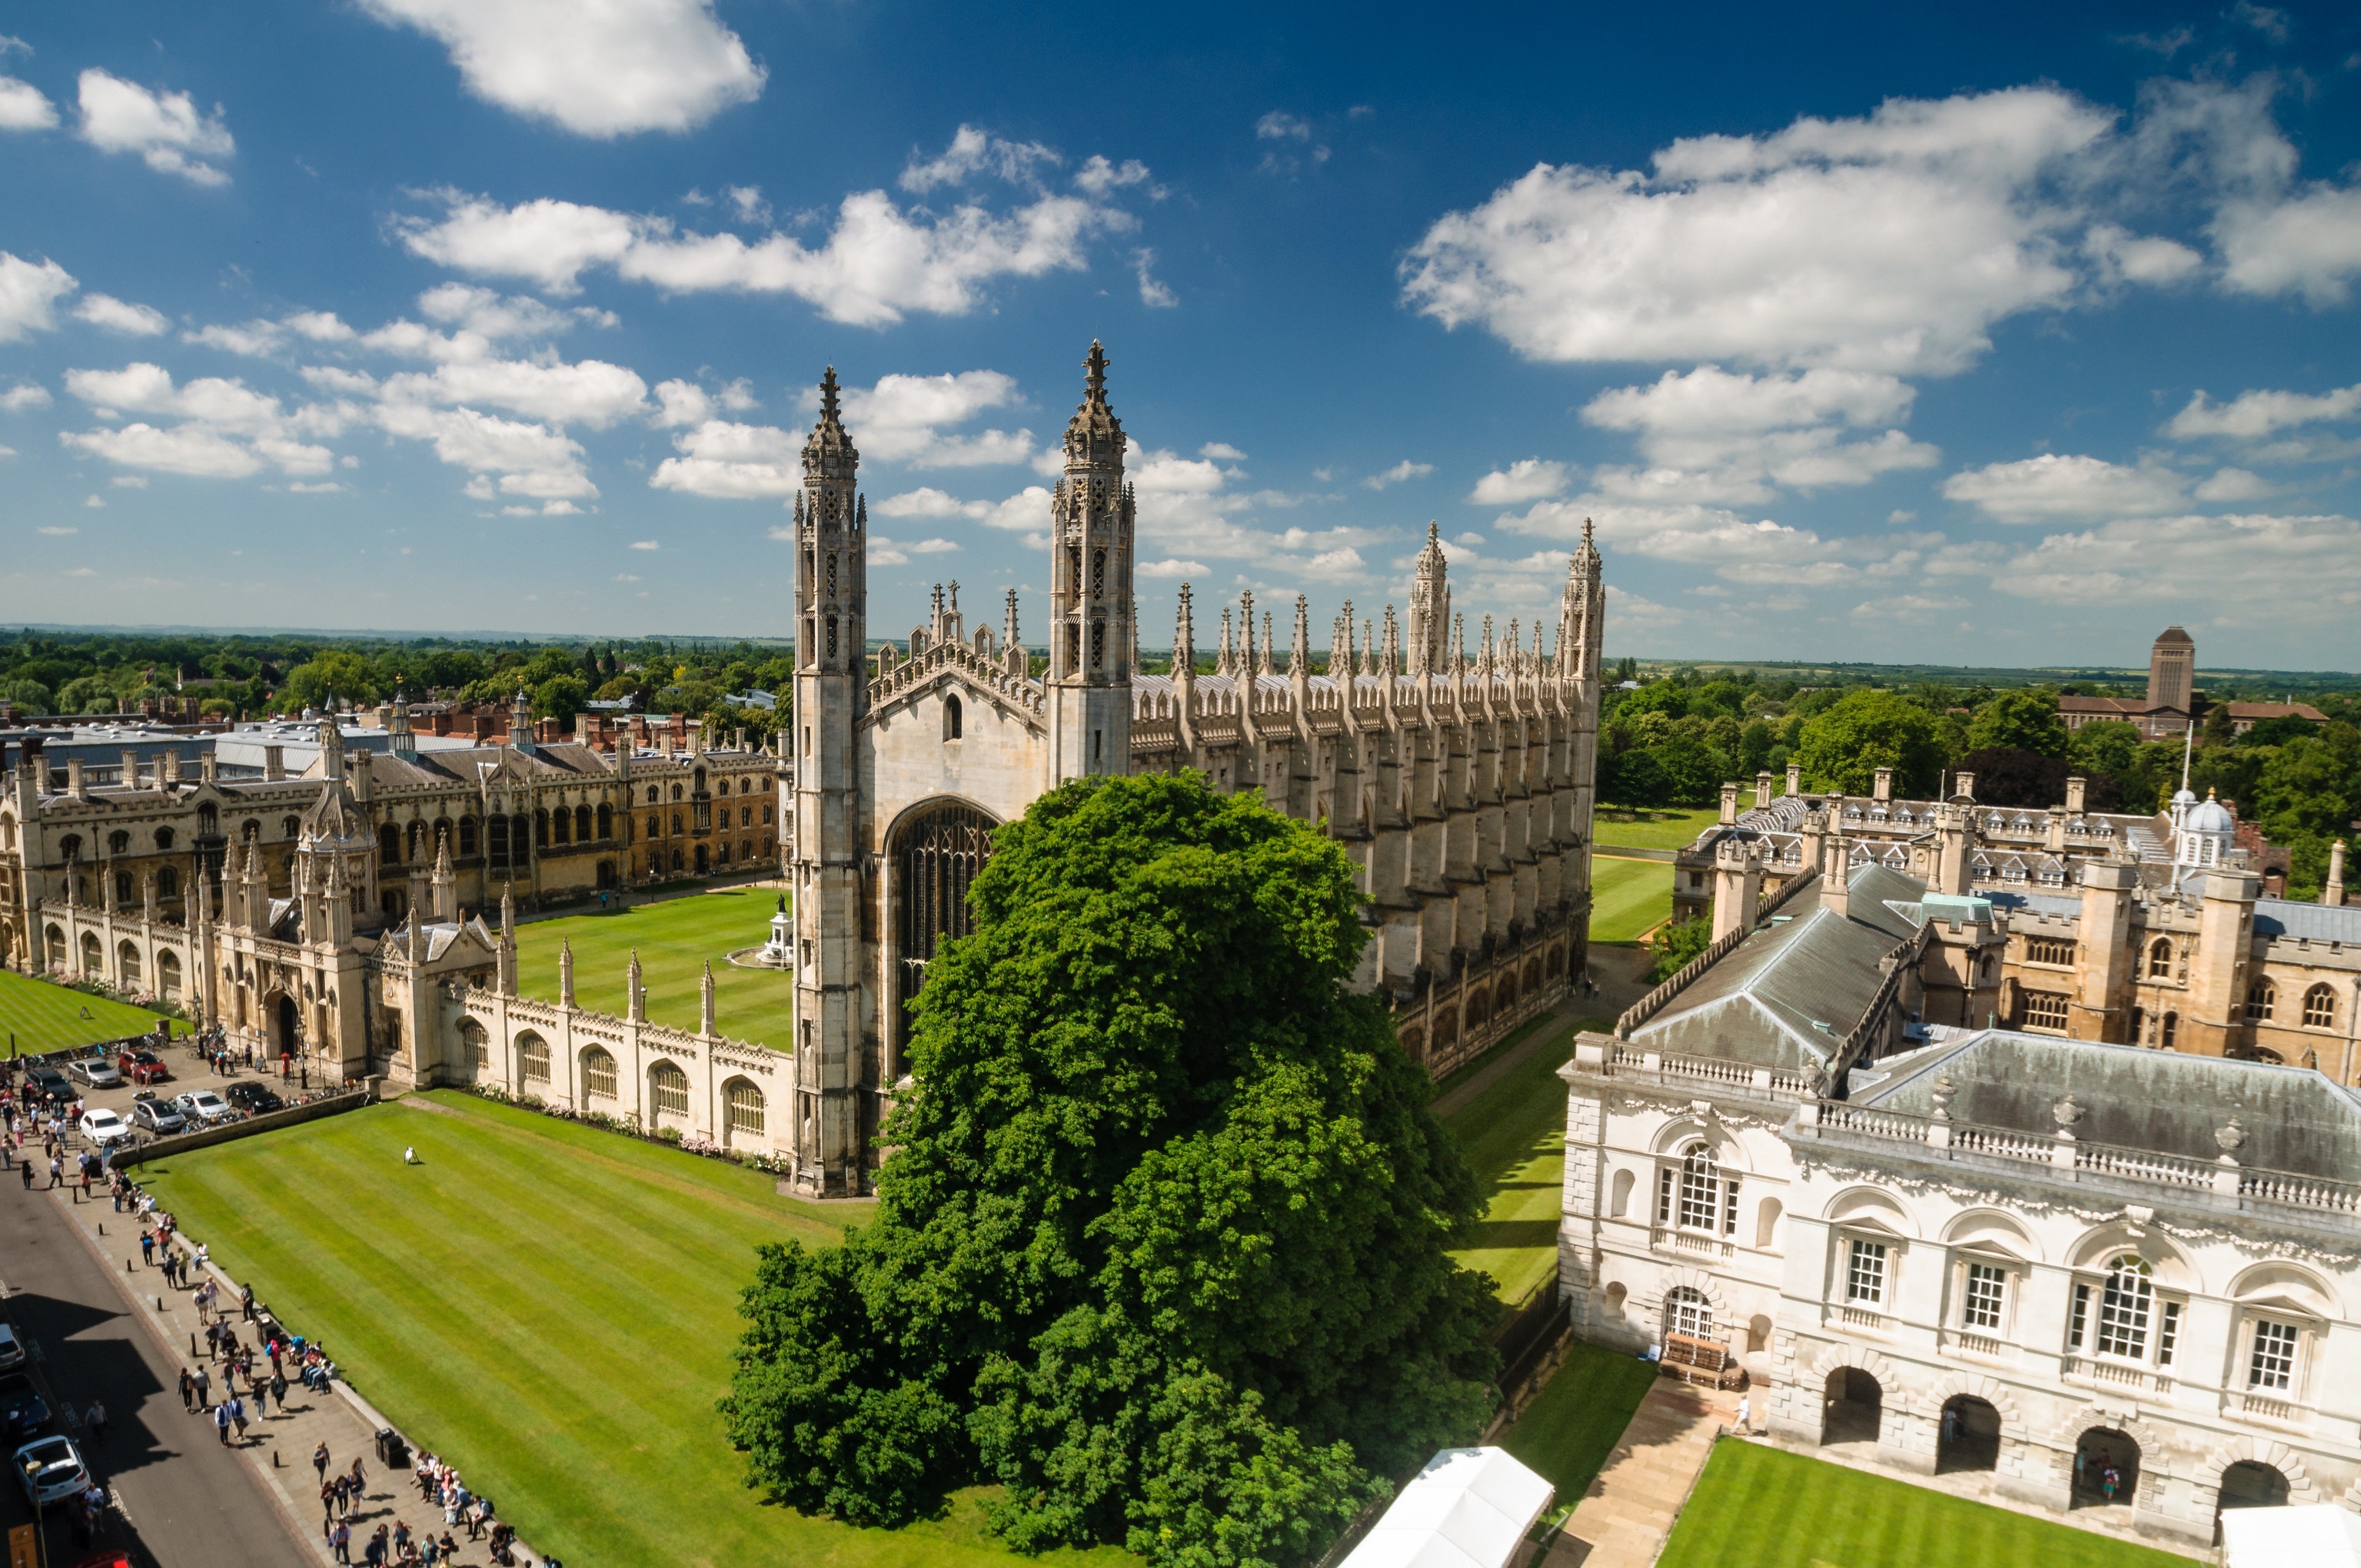 King's College Chapel in Cambridge, England